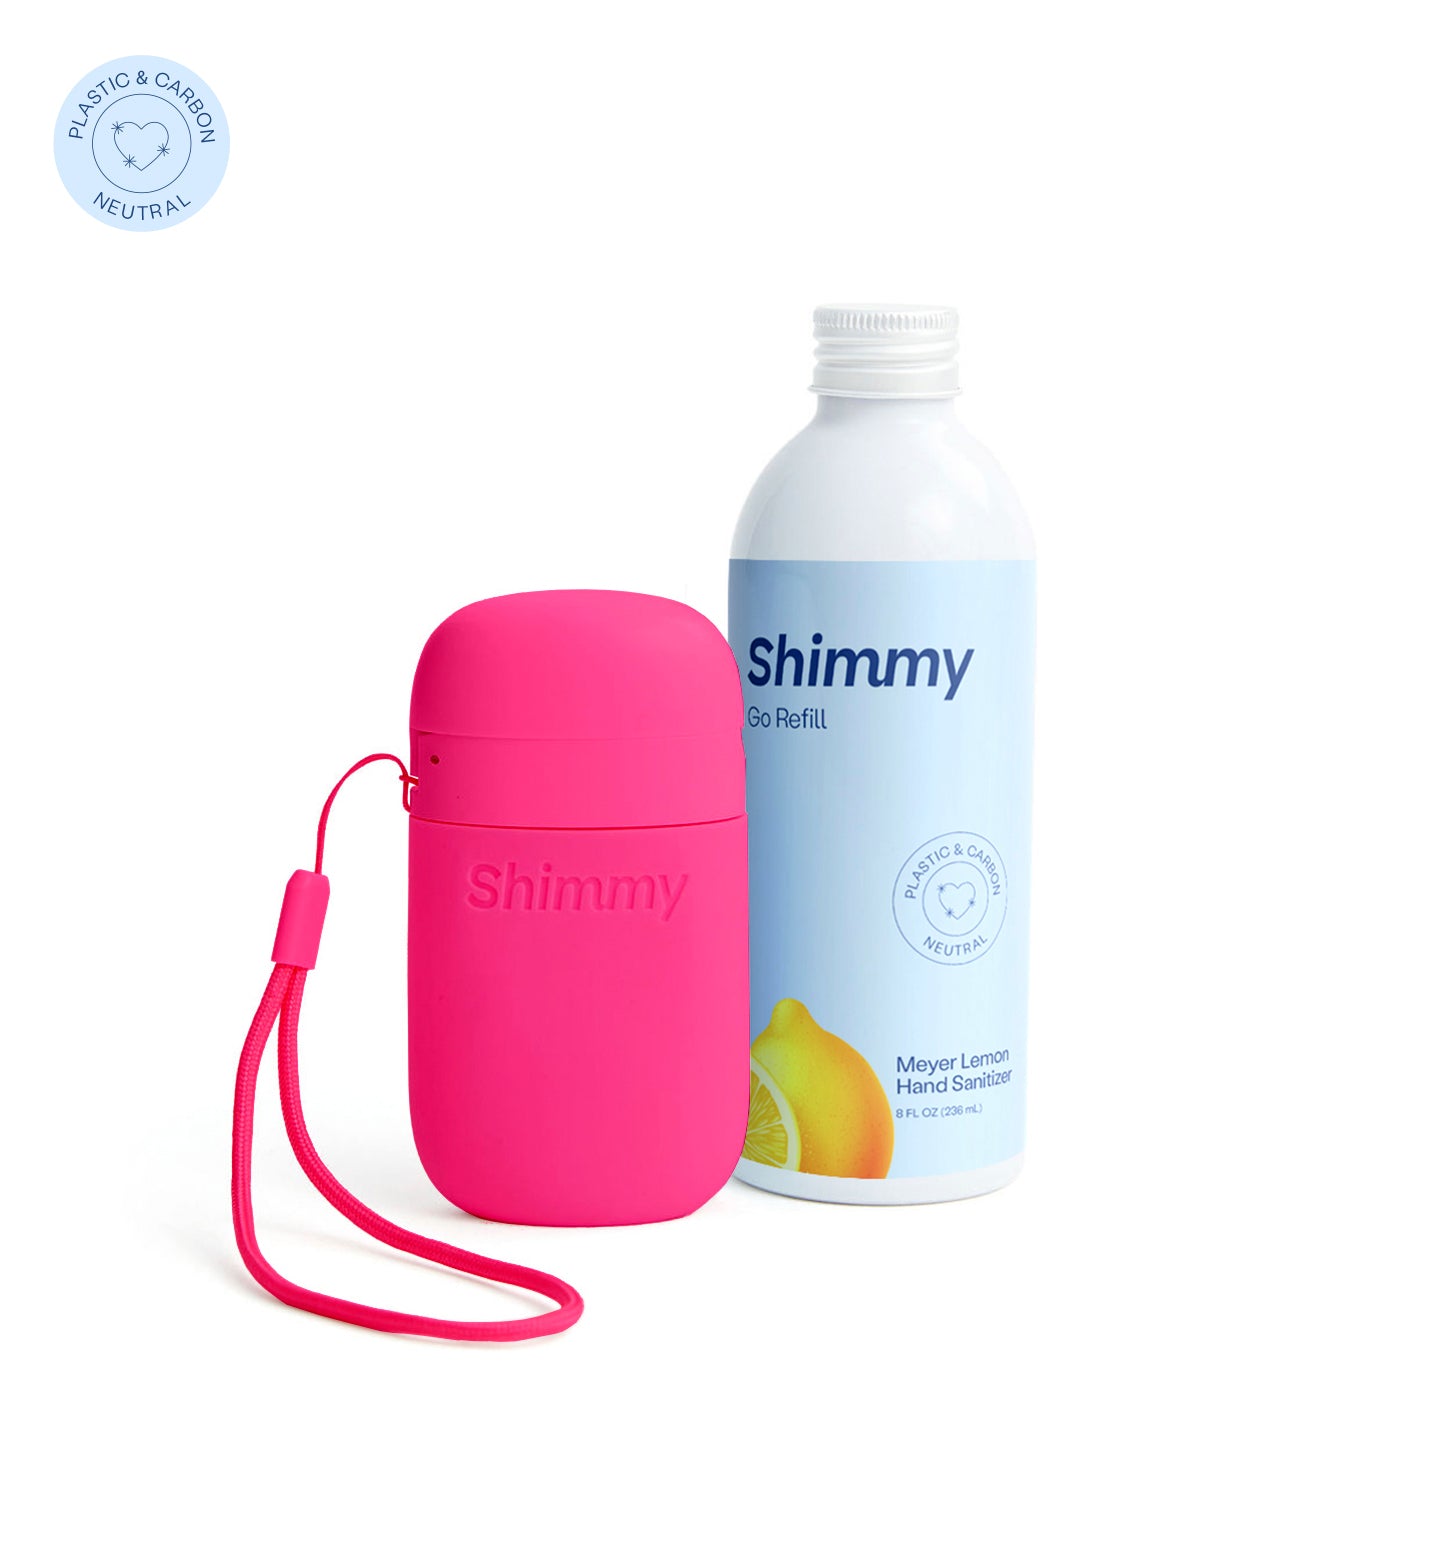 Shimmy Go Portable Hand Sanitizer Dispenser Magenta + Meyer Lemon Hand Sanitizer [41490453790911] - 41490453790911